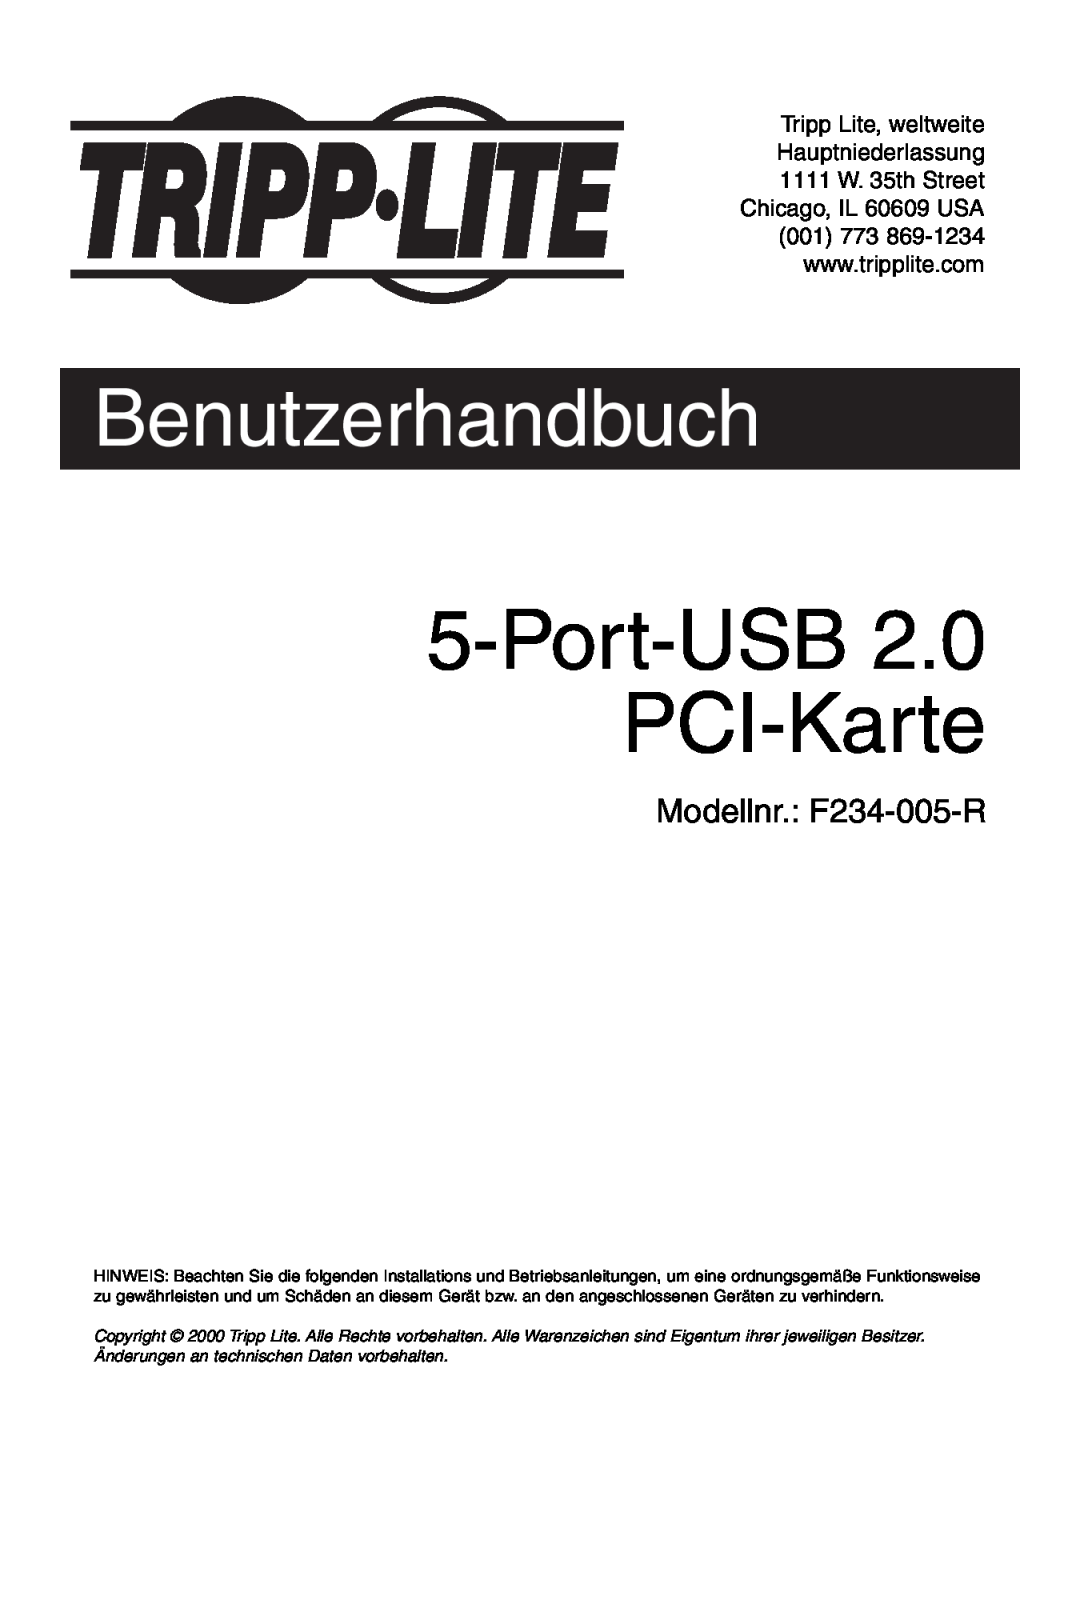 Tripp Lite U234-005-R user manual Port-USB 2.0 PCI-Karte, Benutzerhandbuch 